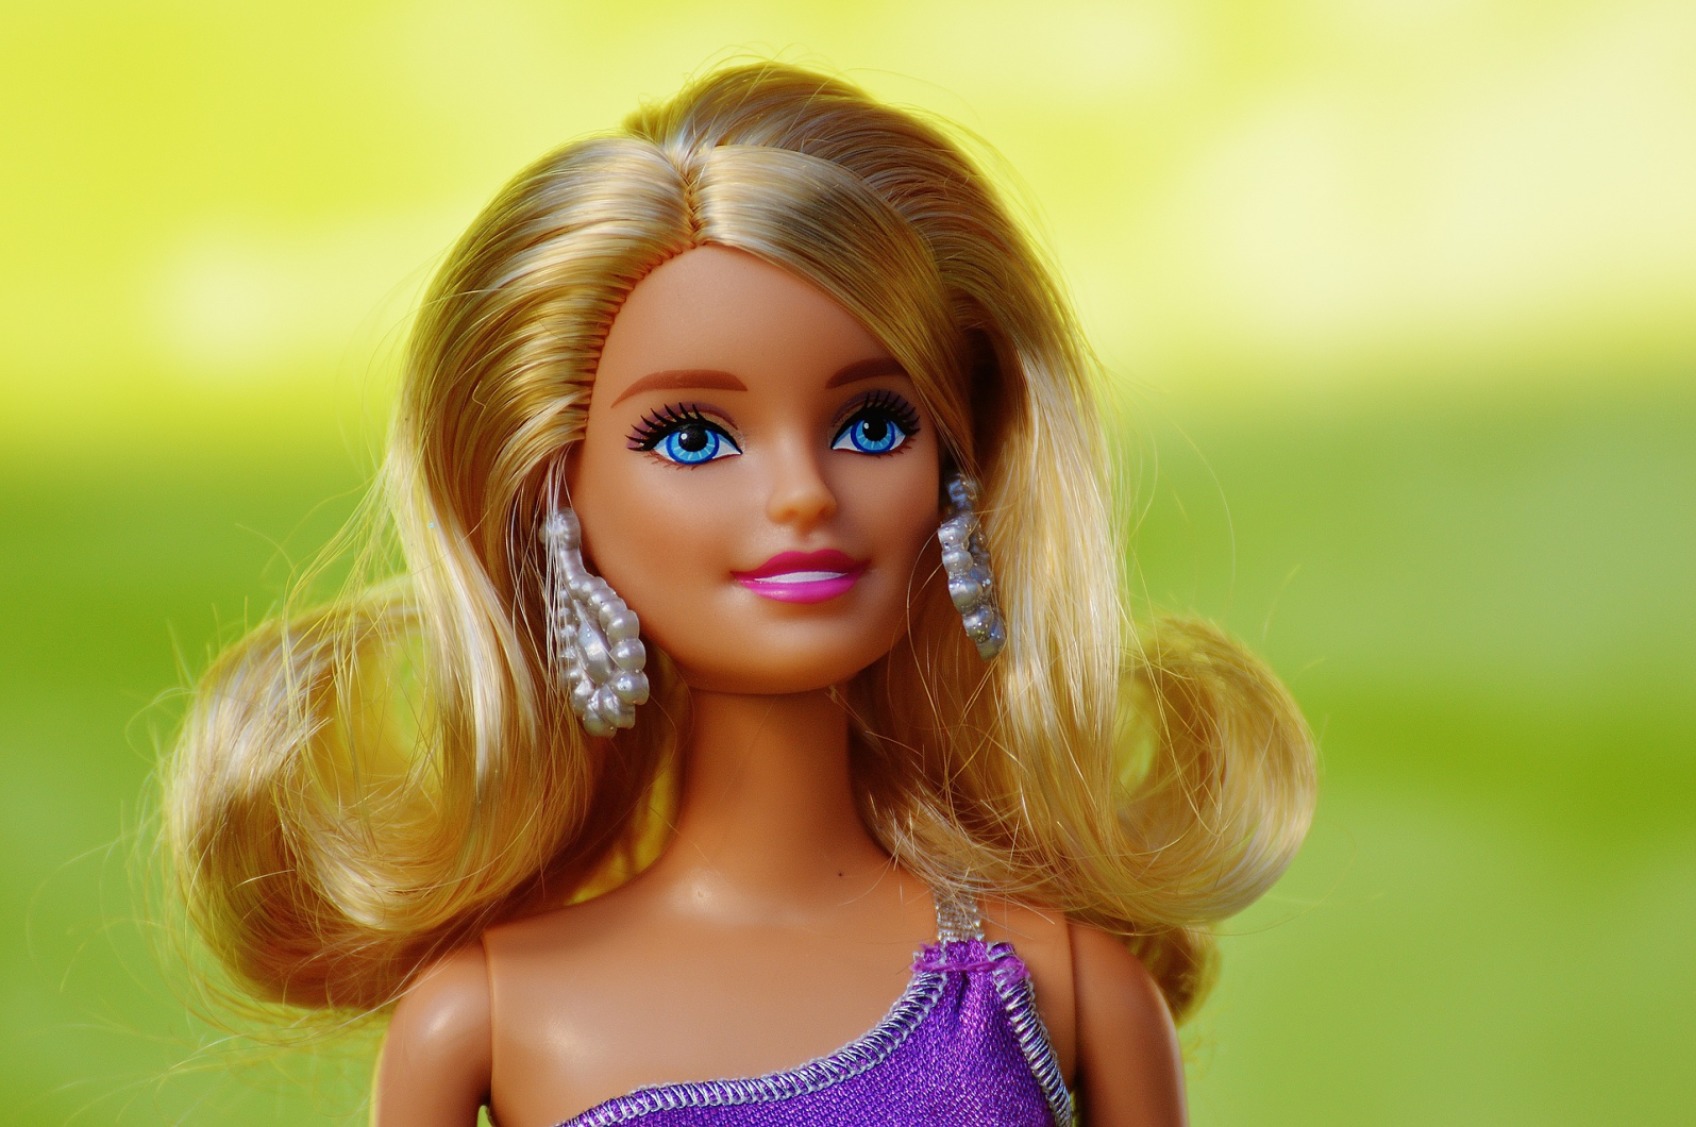 Barbie - Original image